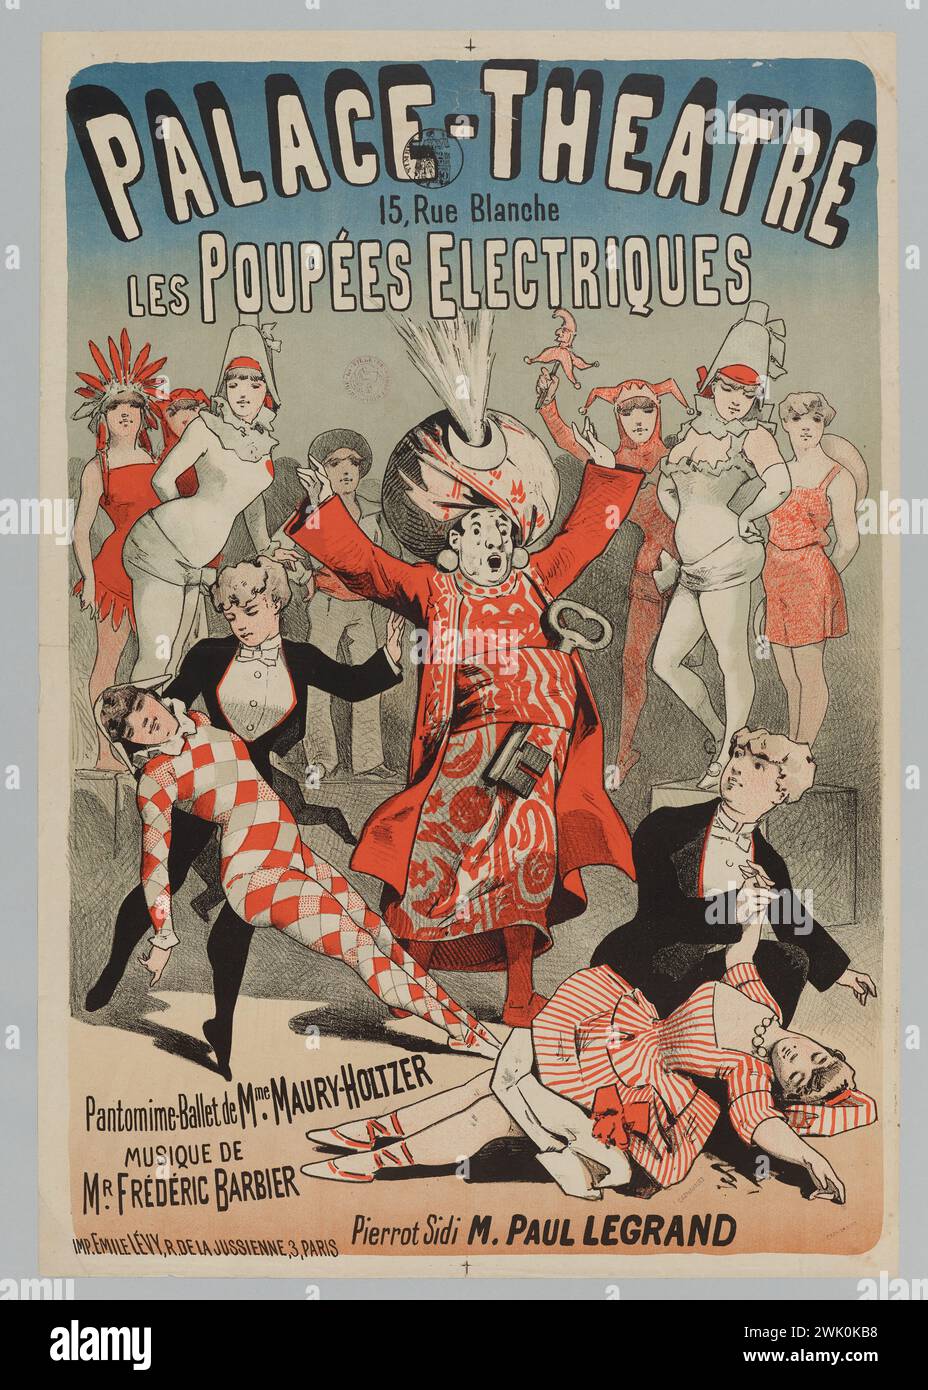 Anonymous, Palace-theatre/ 15, rue Blanche/ Les Poupees Electriques/ Pantomime-Ballet by Mme Maury-Holtzer (title registered (letter)), 1883. Color lithography. Carnavalet museum, history of Paris. Stock Photo